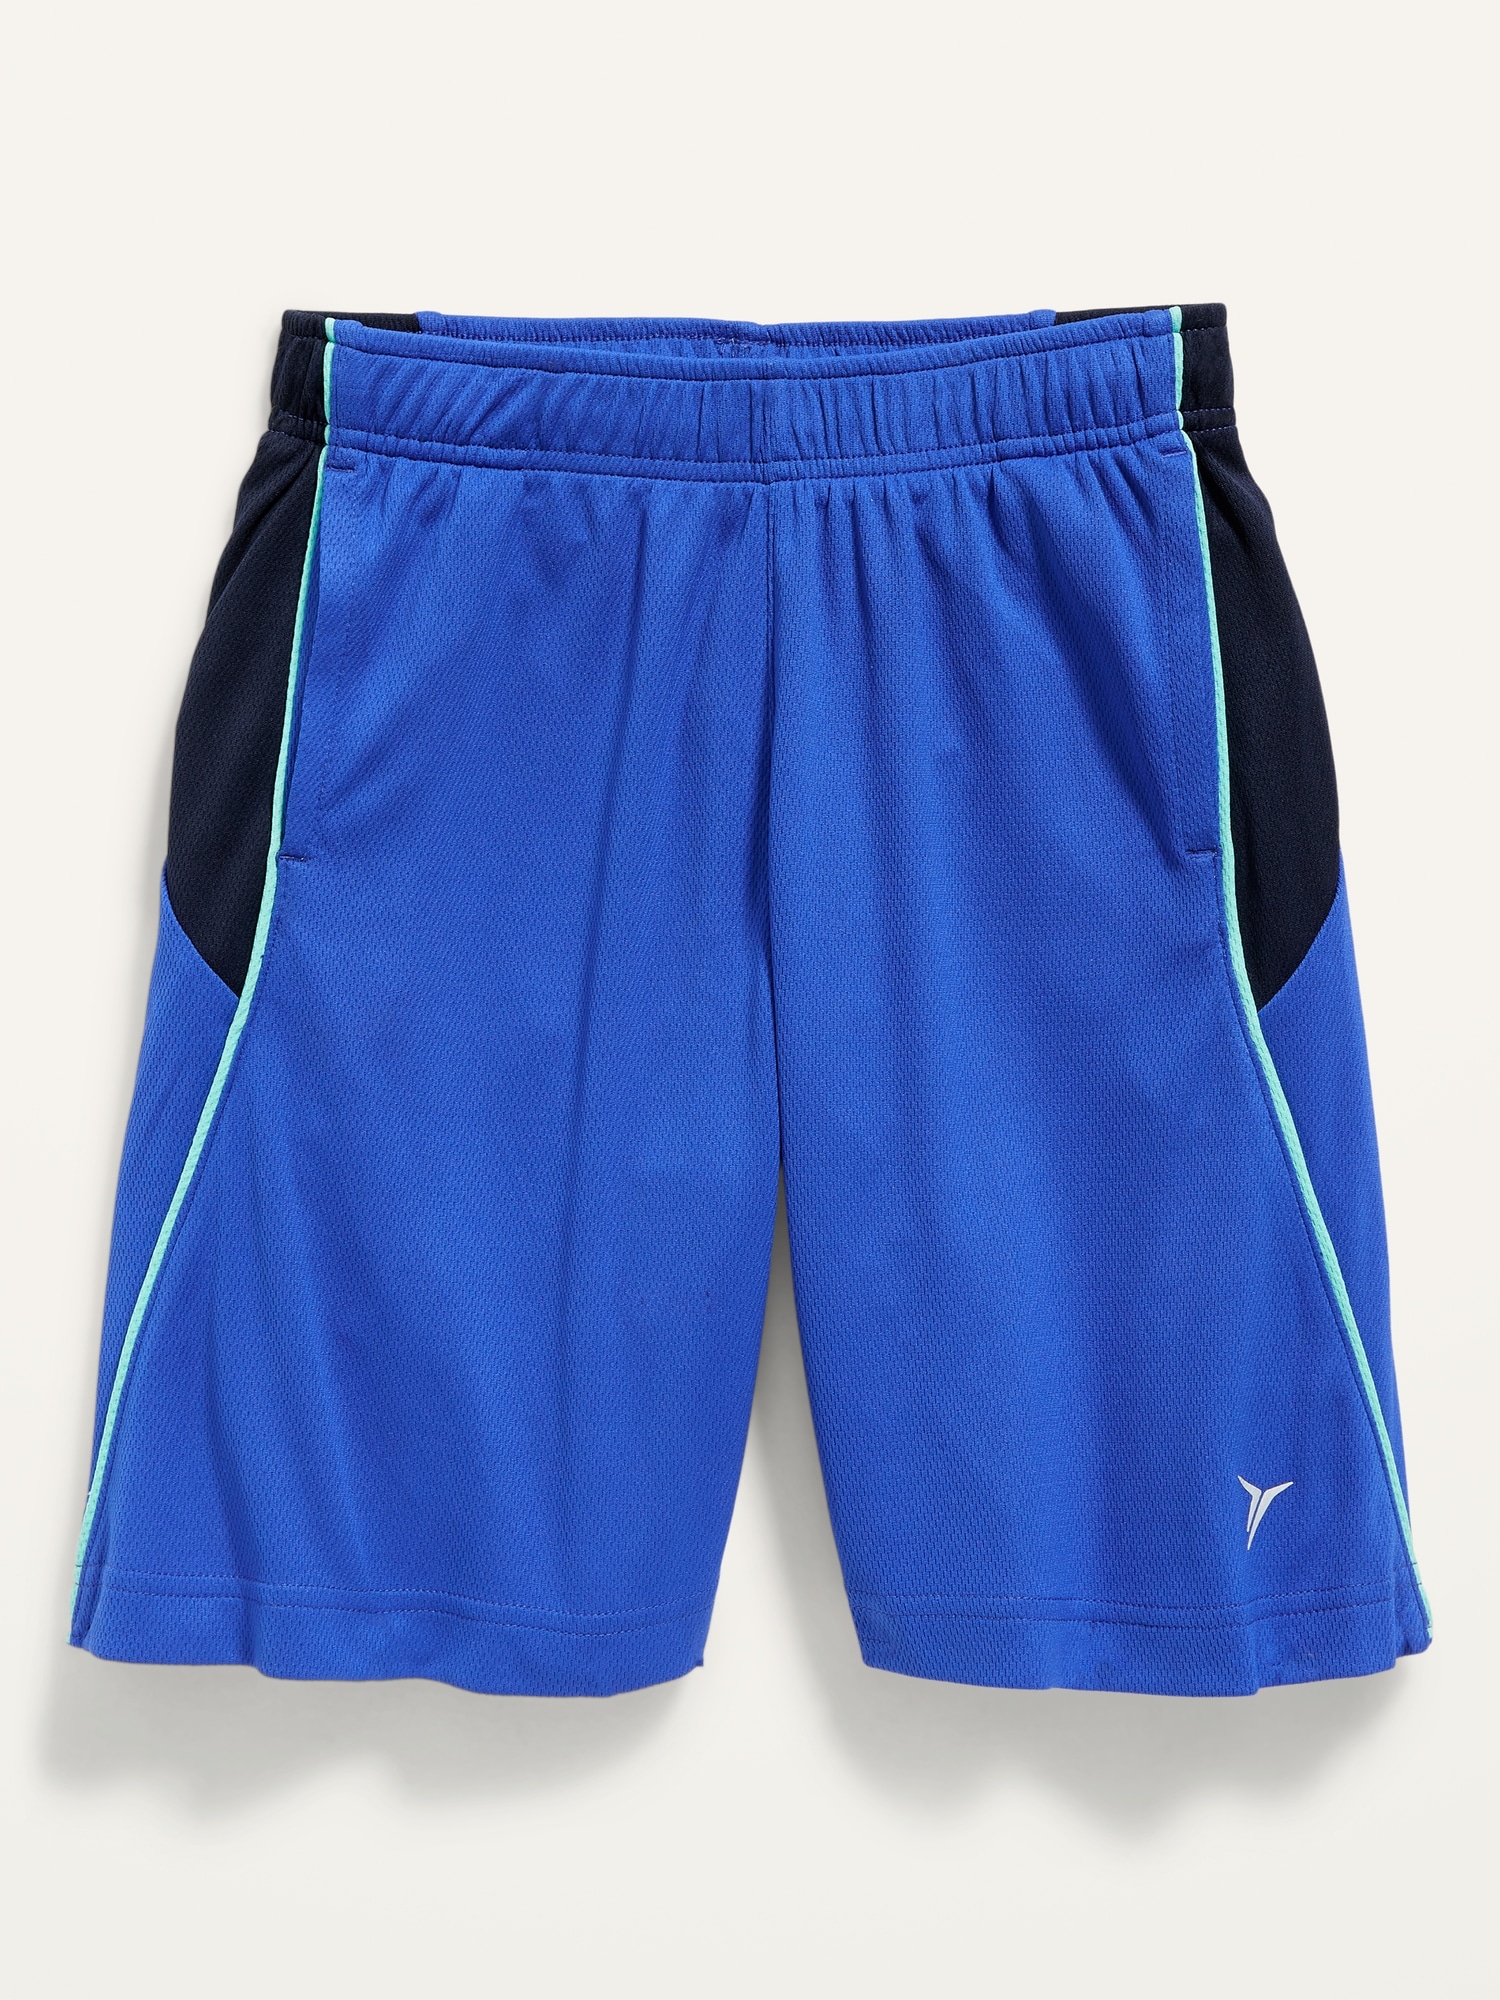 Old Navy Go Dry  Boys  Shorts Sizes 8 10/12 14/16 18 Blue or Gray Black NWT 